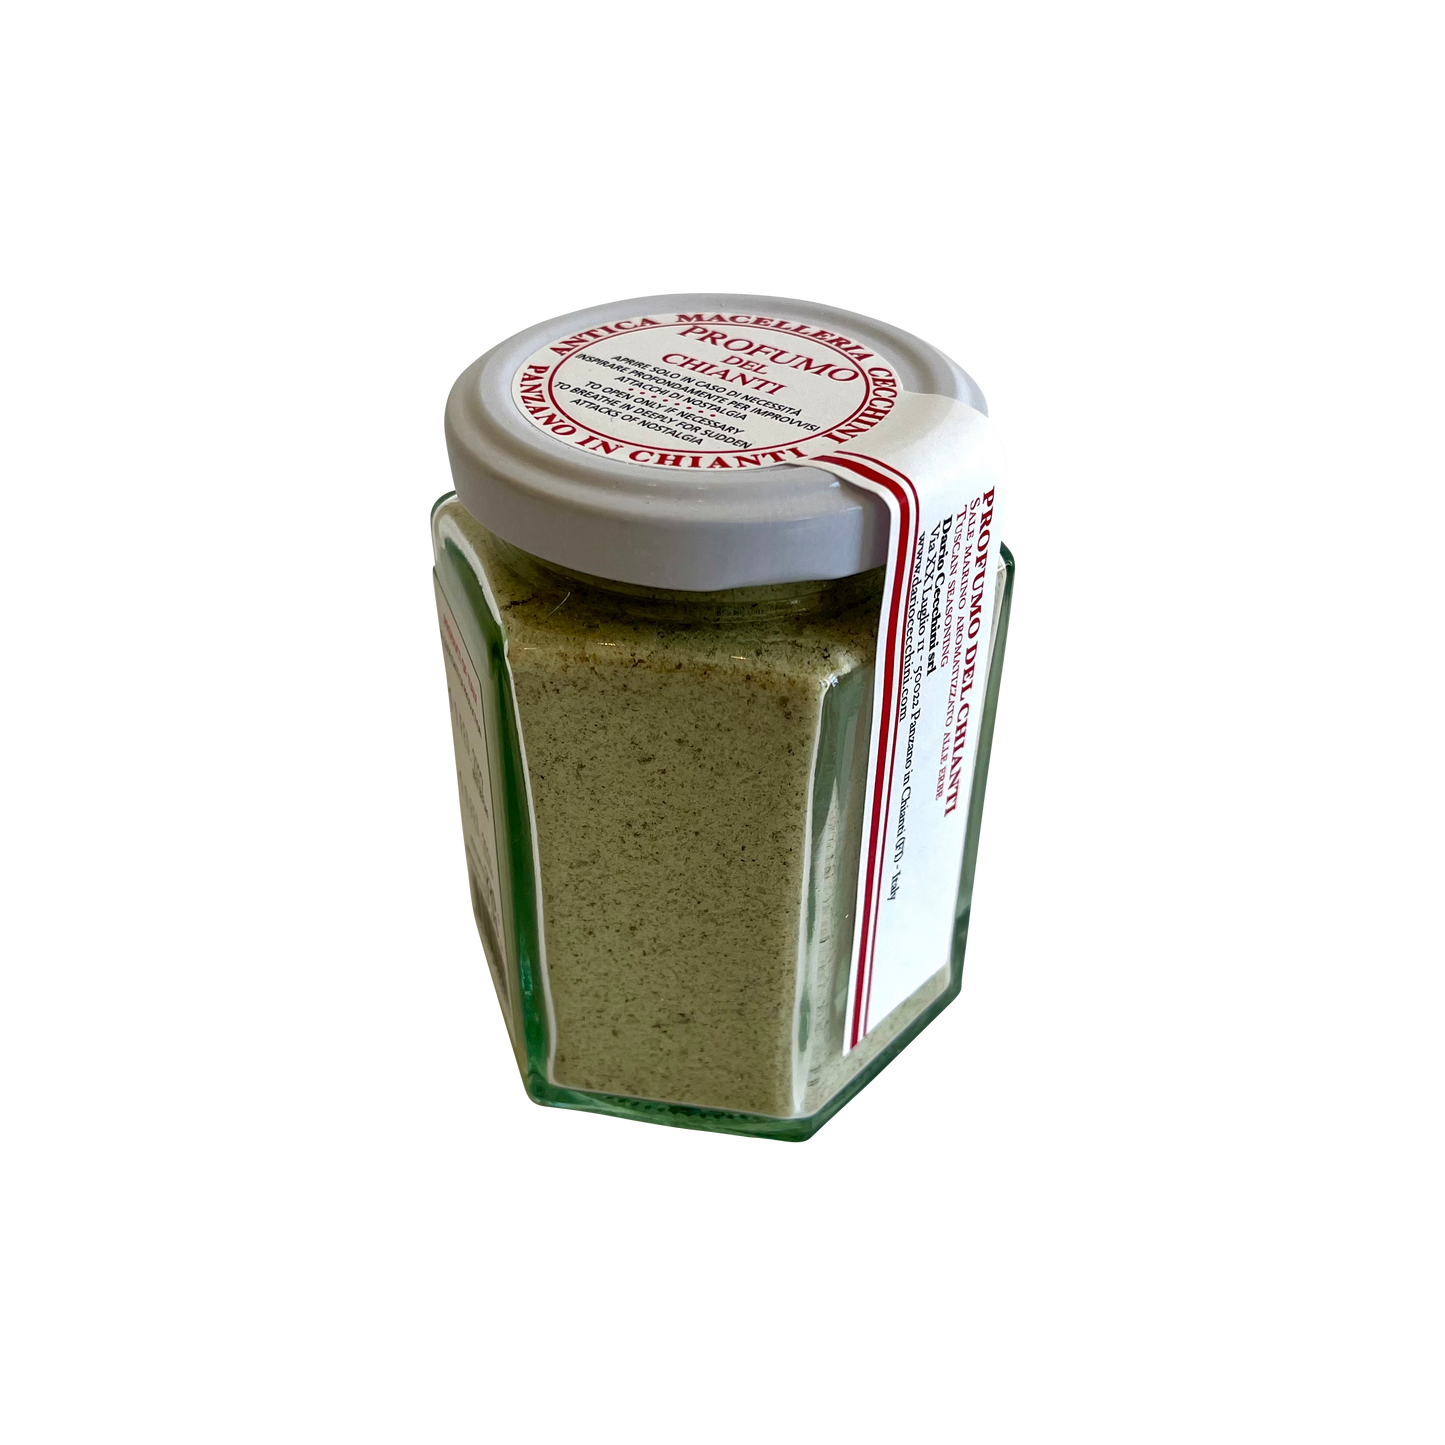 Profumo del Chianti jar PDC-002